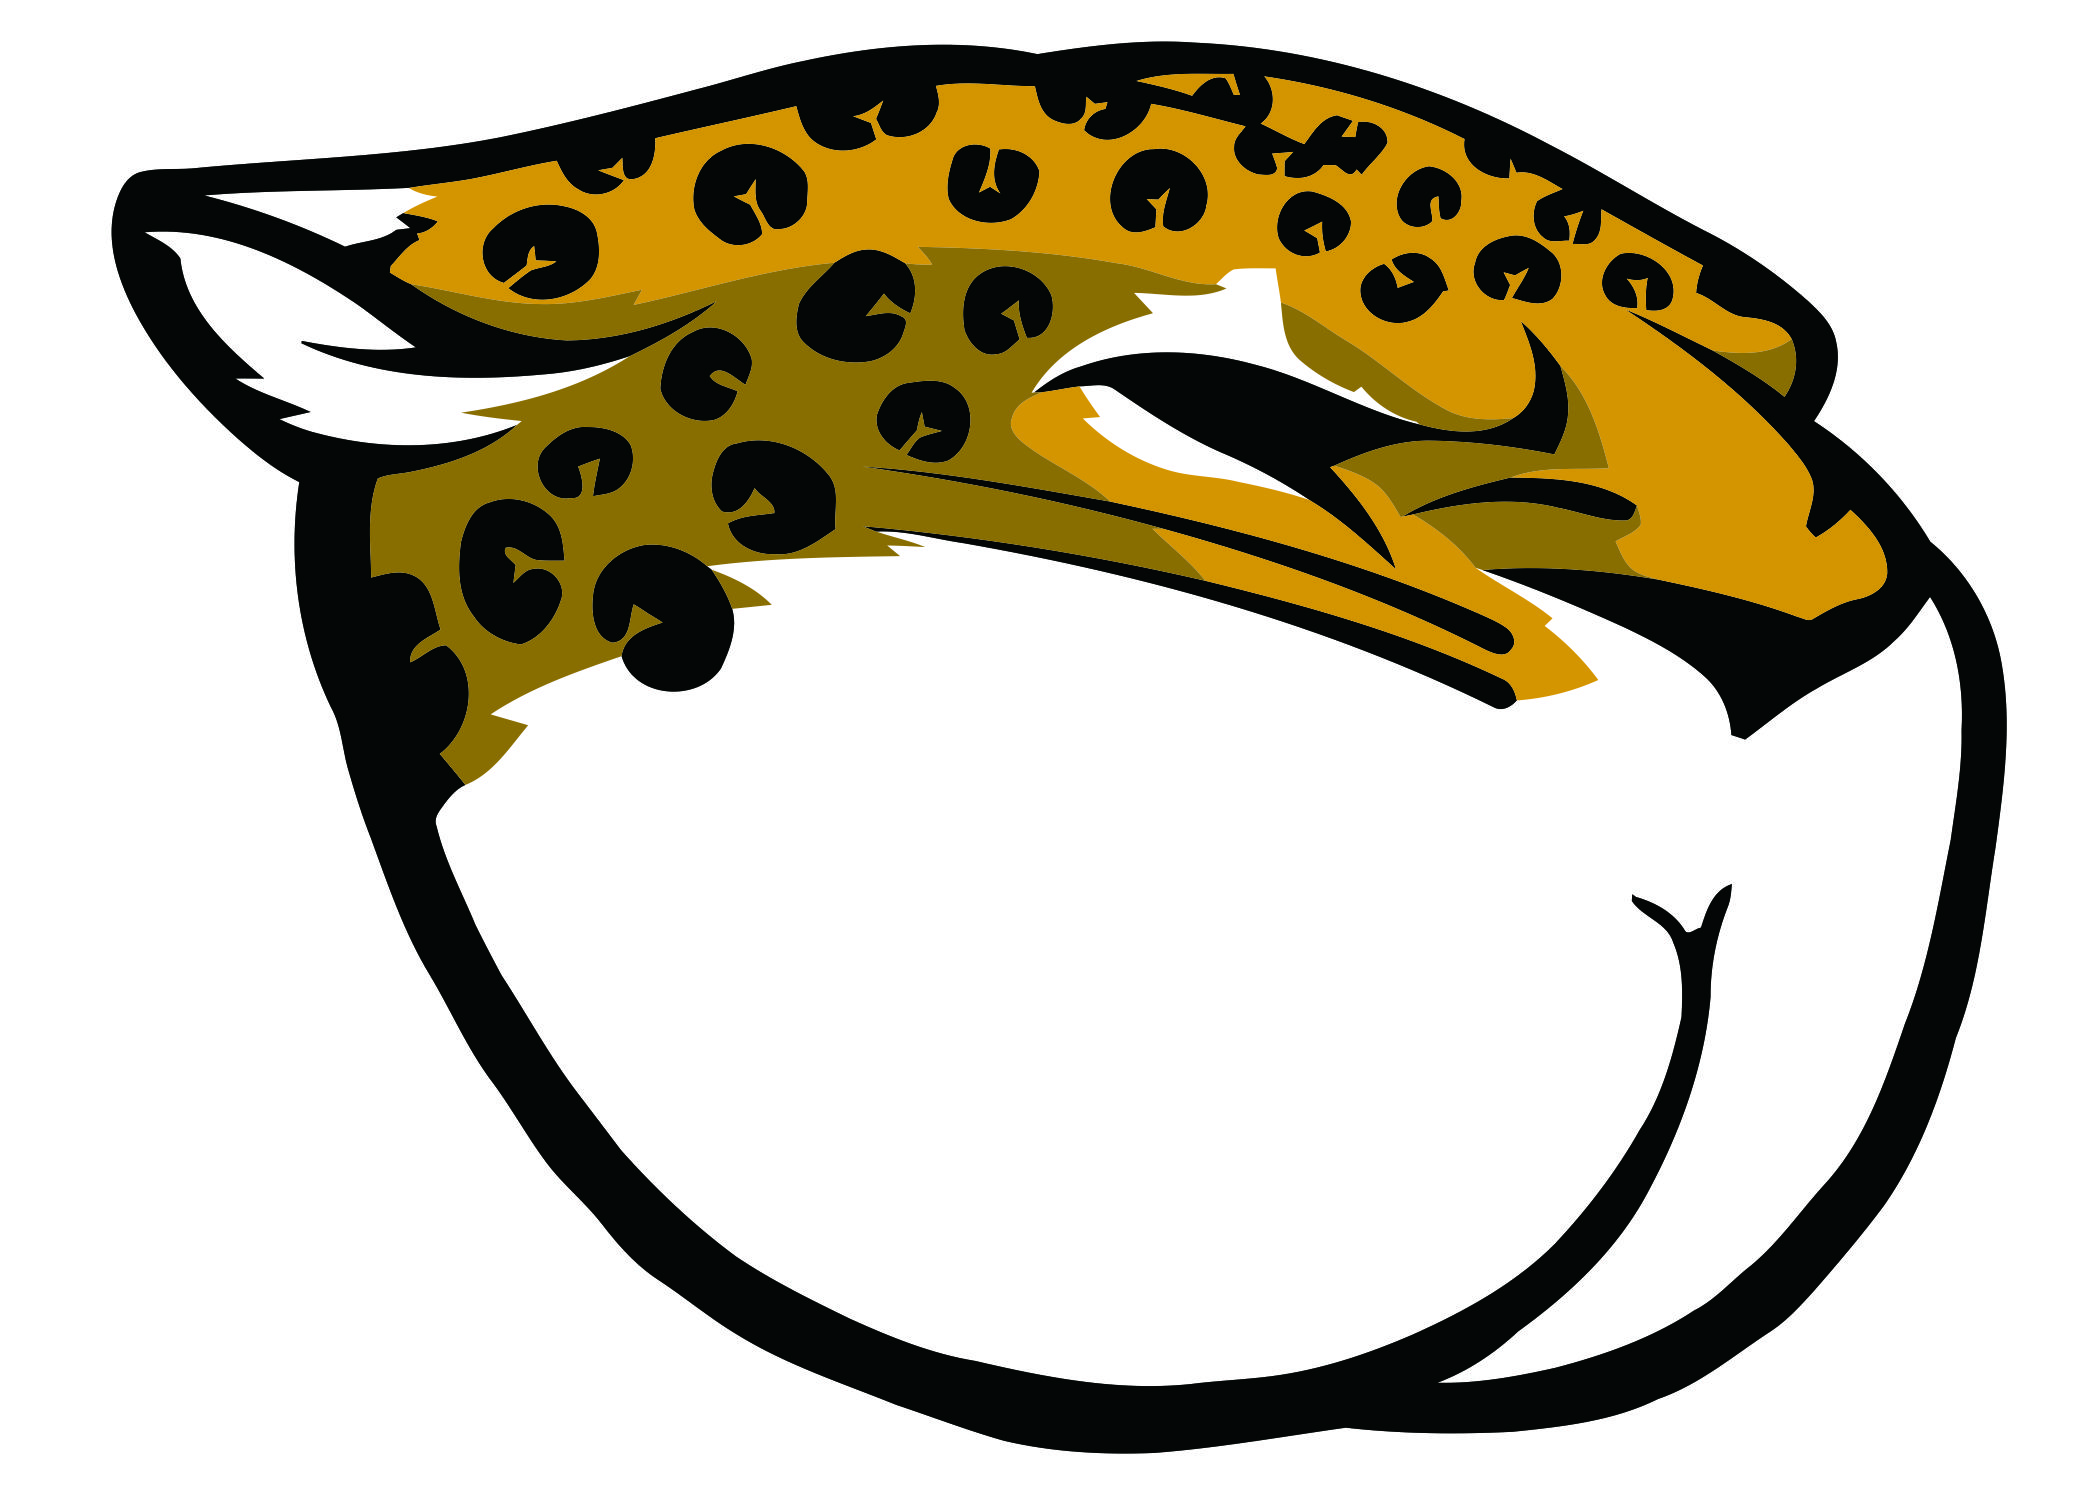 Jacksonville Jaguars Butts Logo fabric transfer